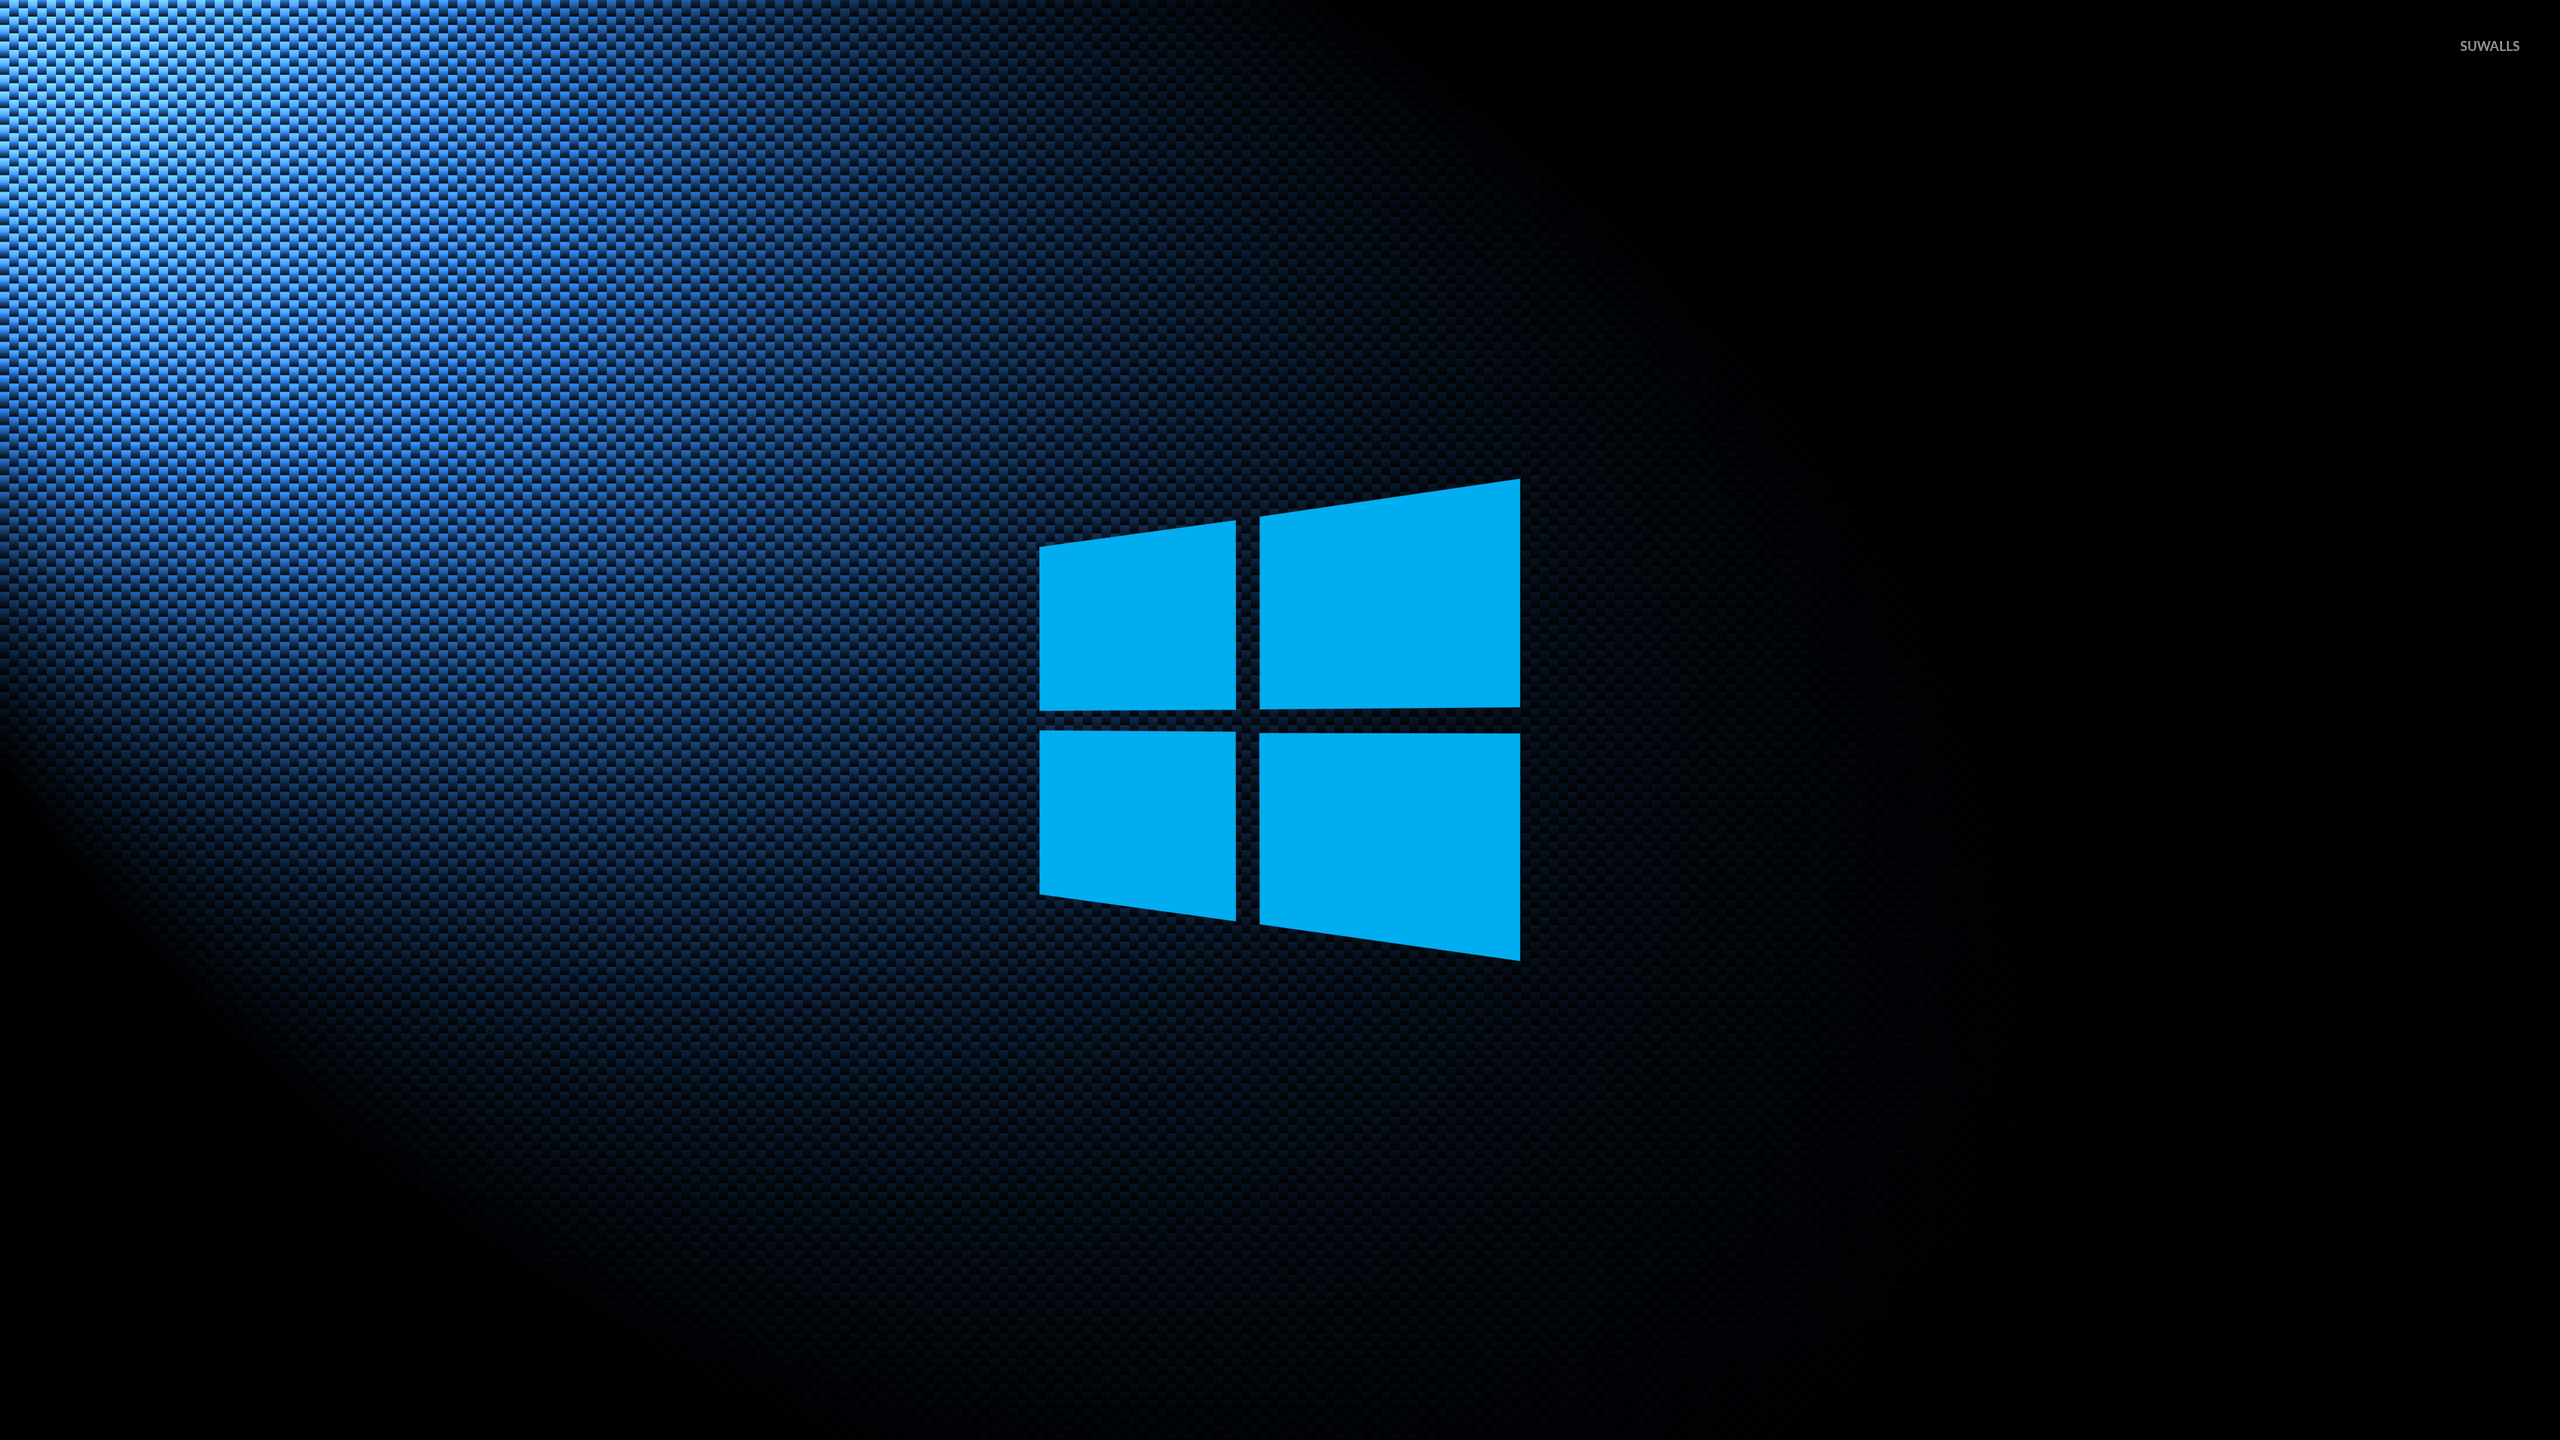 Windows 10 simple blue logo on carbon fiber wallpaper - Computer ...